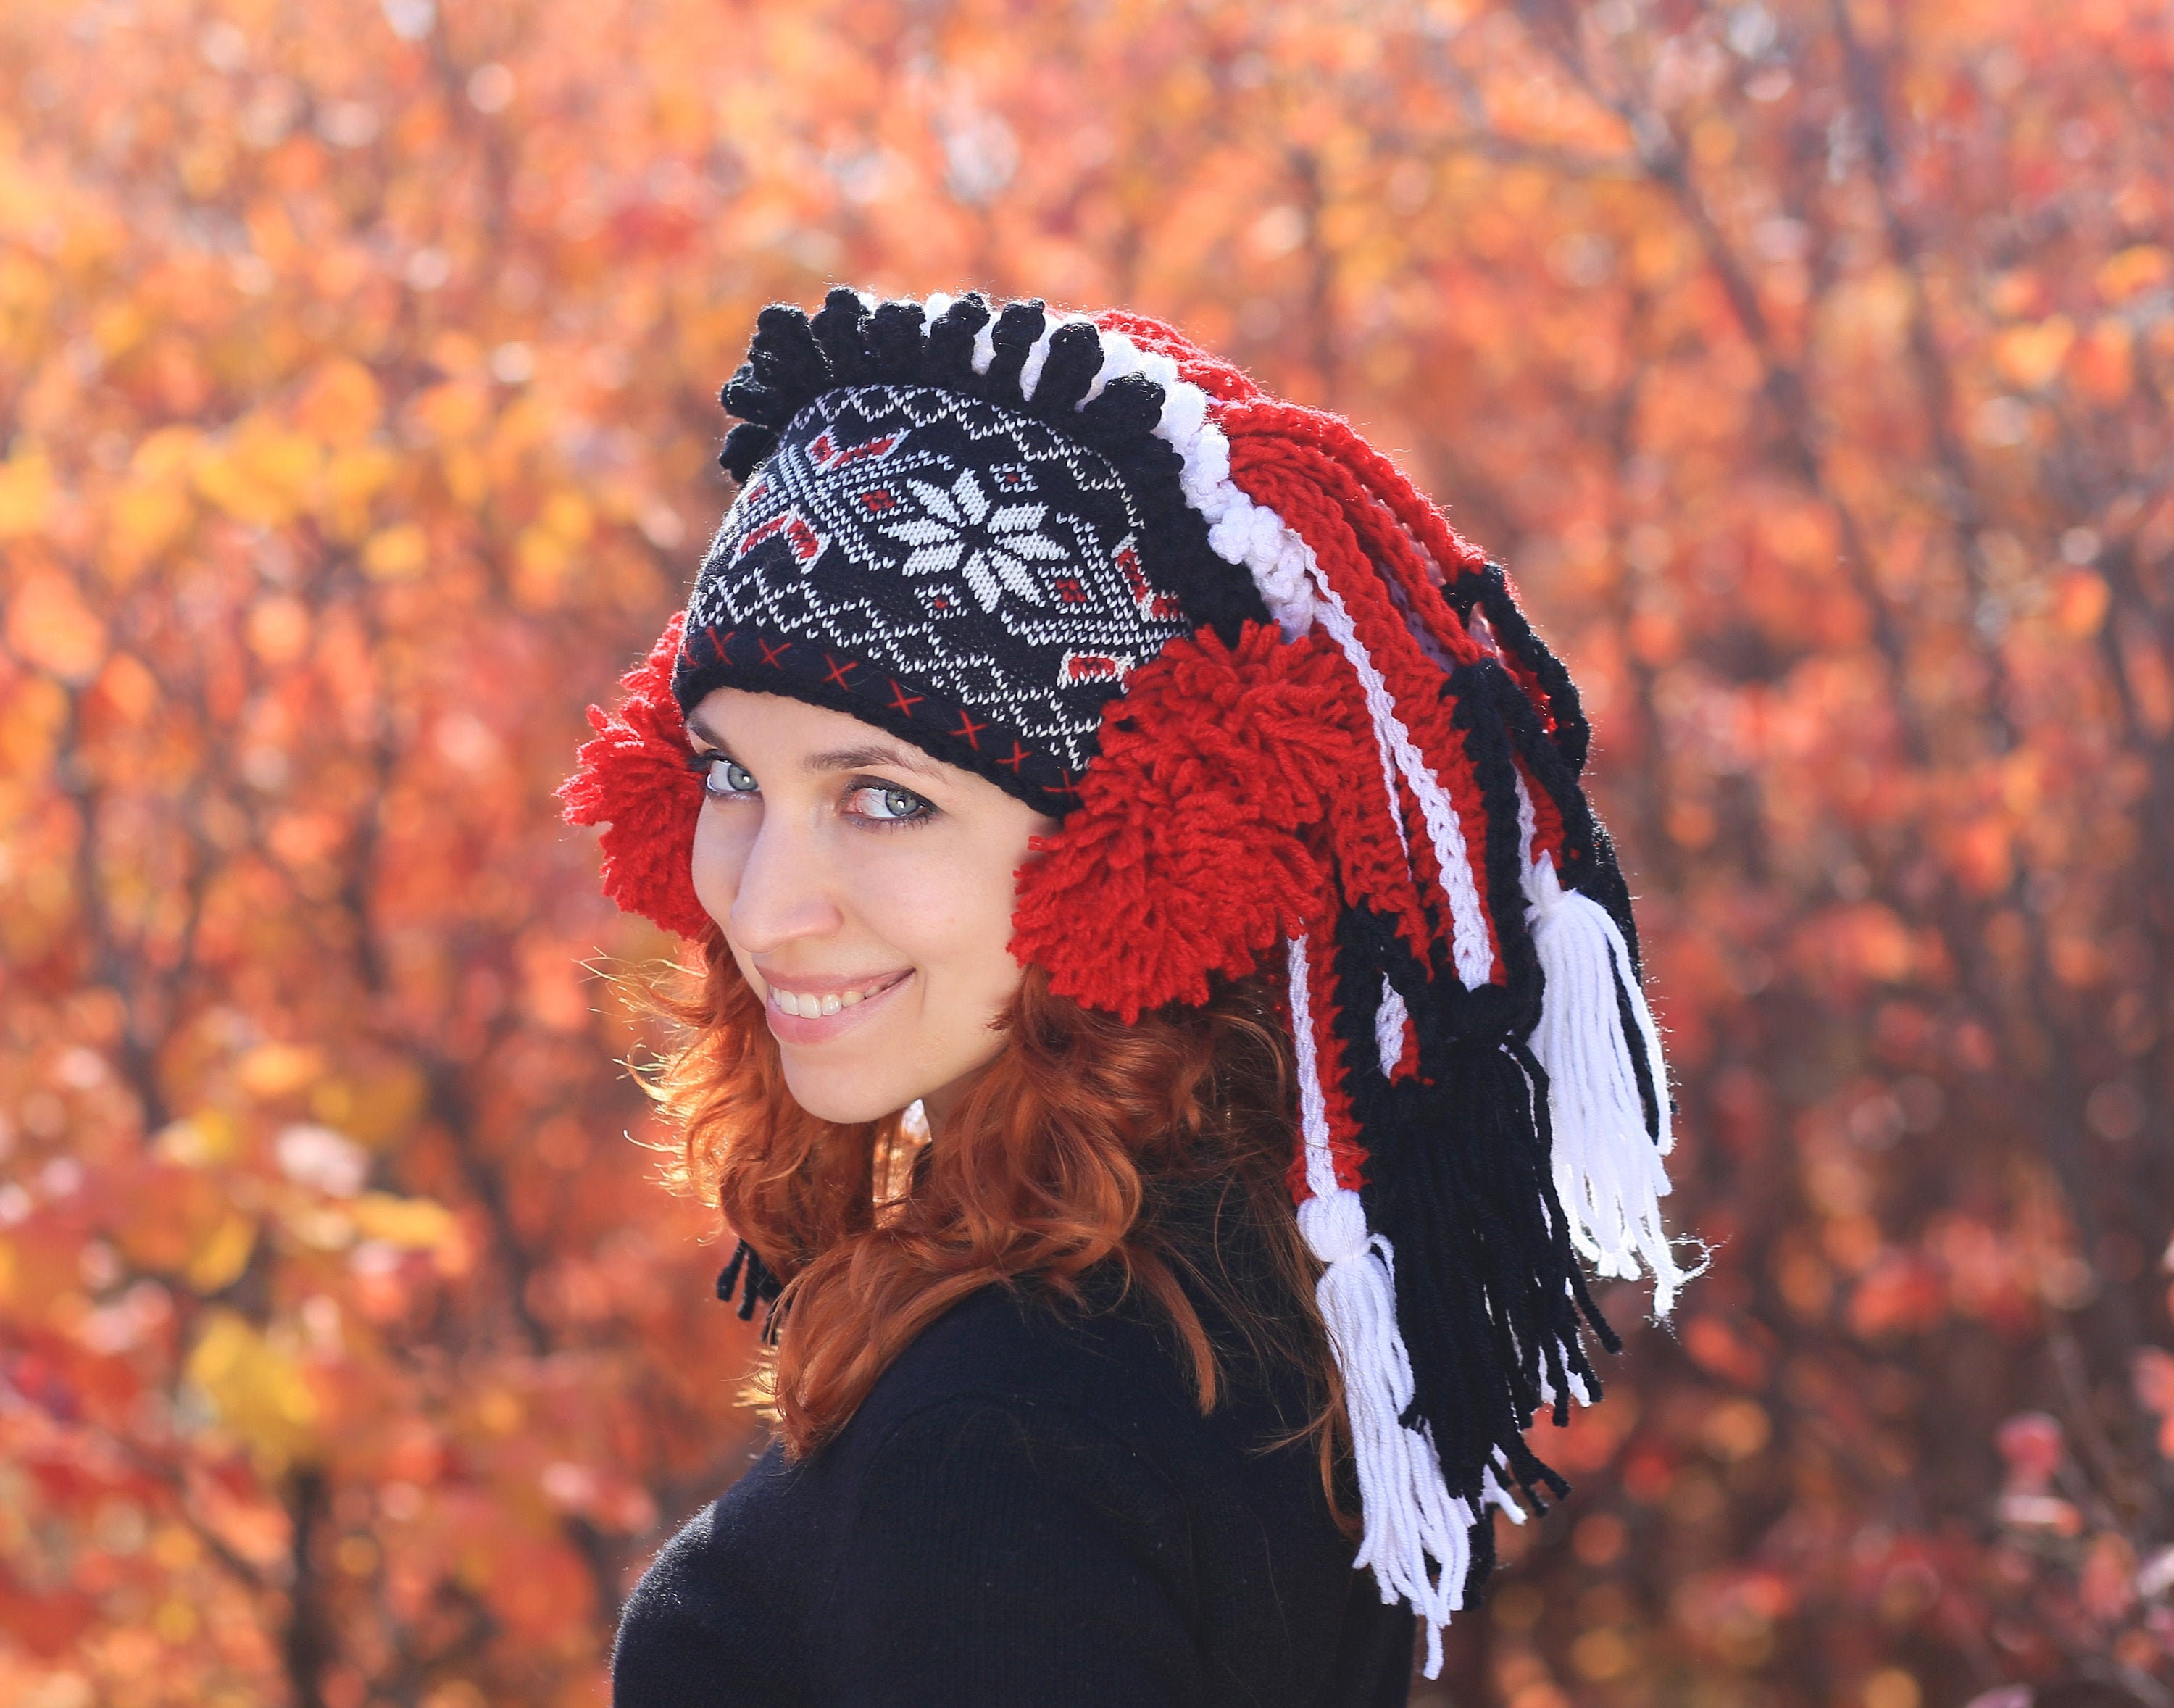 Grenache Black Hand Knit Hat Women, BLACK Knit WOMEN Hand Crocheted  Handmade Winter Hats, Black Red, Gifts for Women 